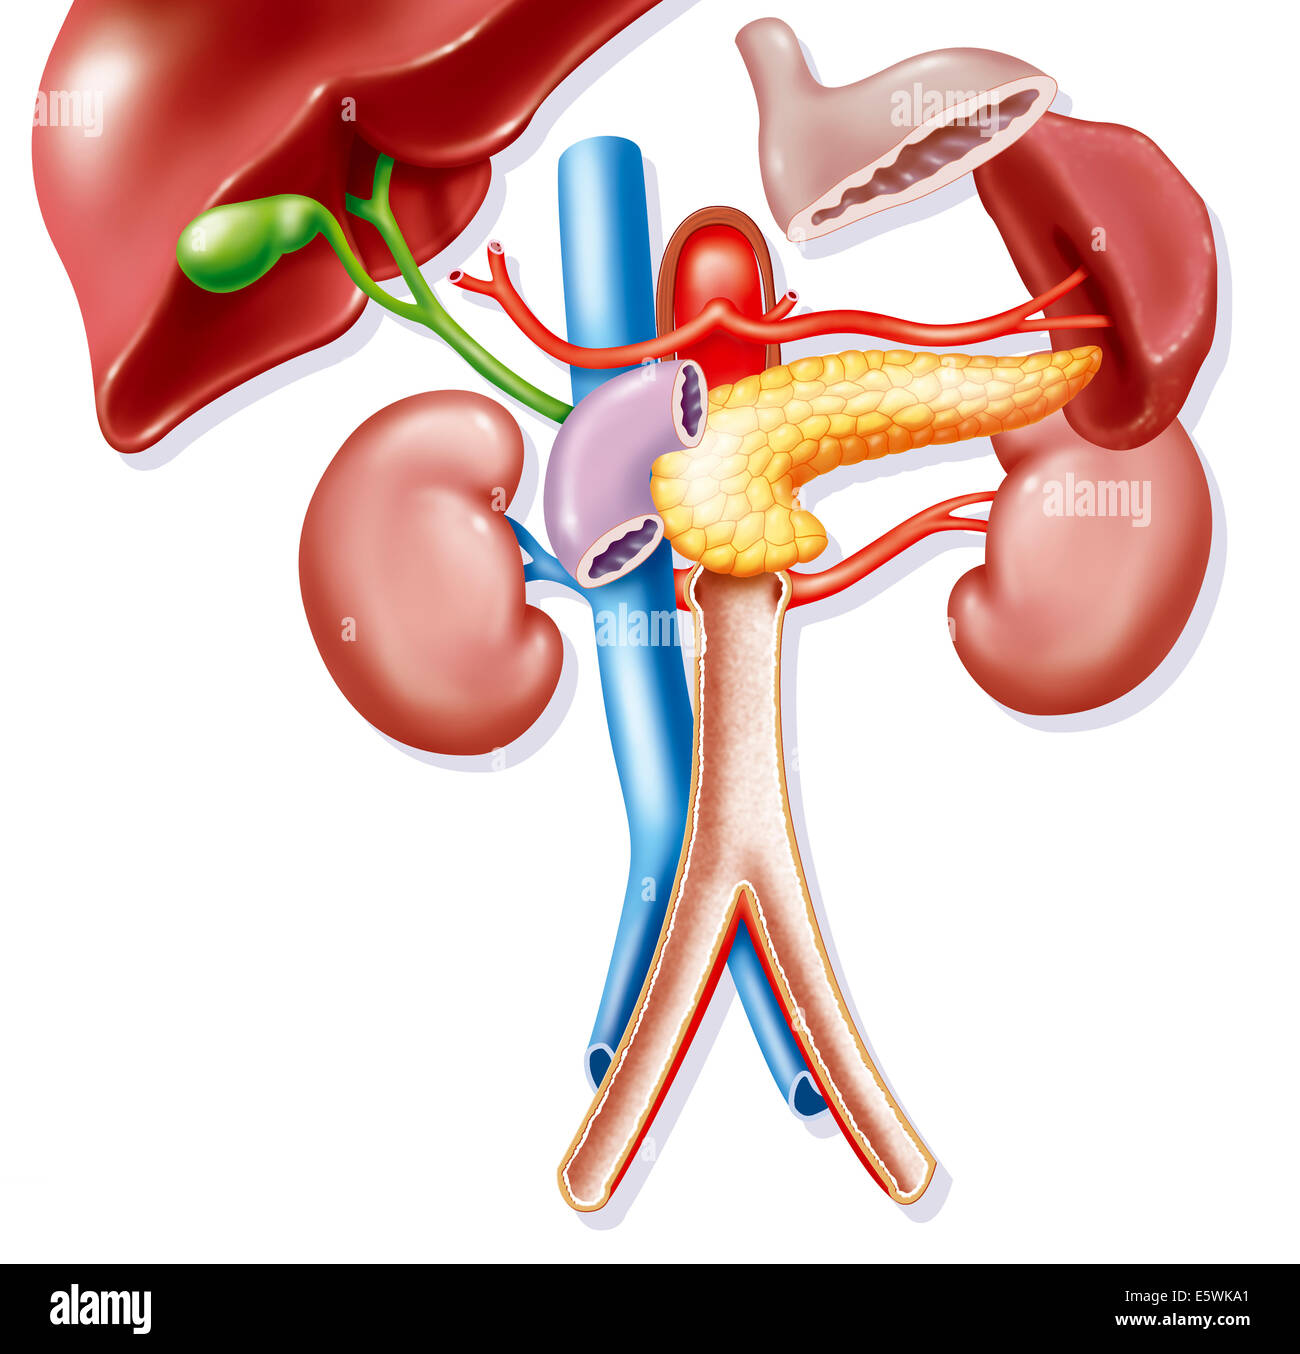 Arterial calcification Stock Photo